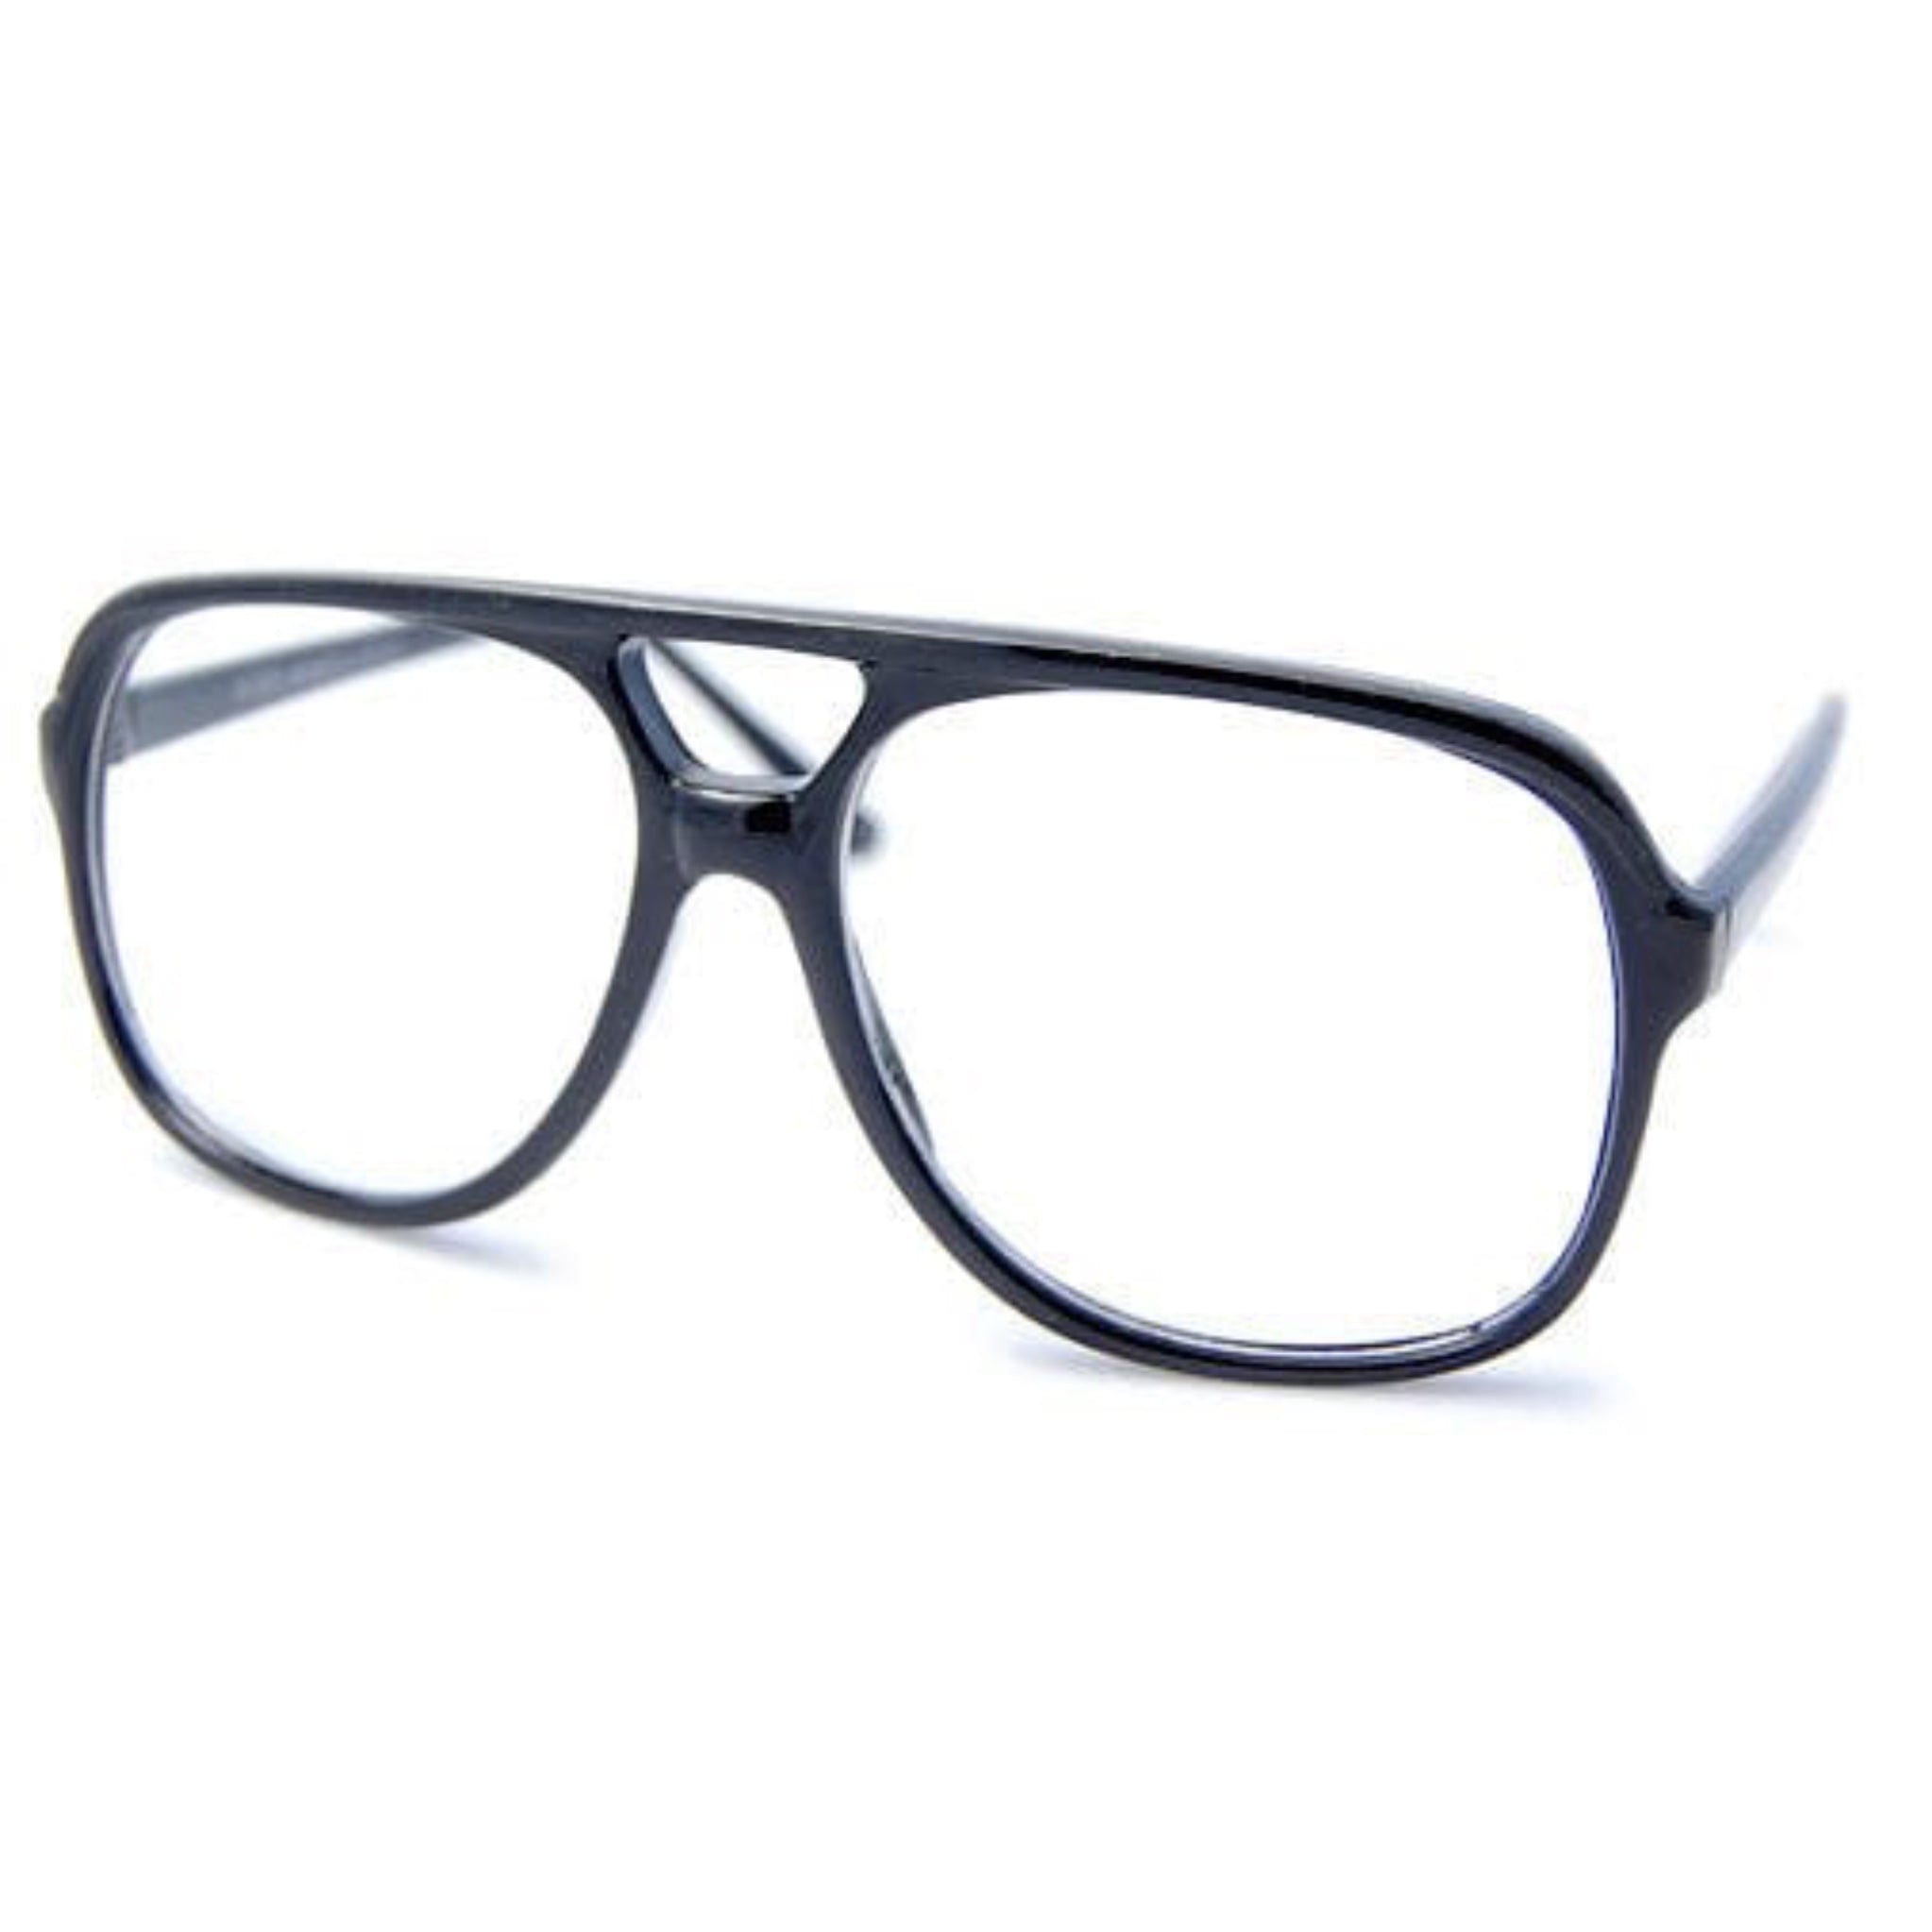 CALCULATOR Black Clear Glasses